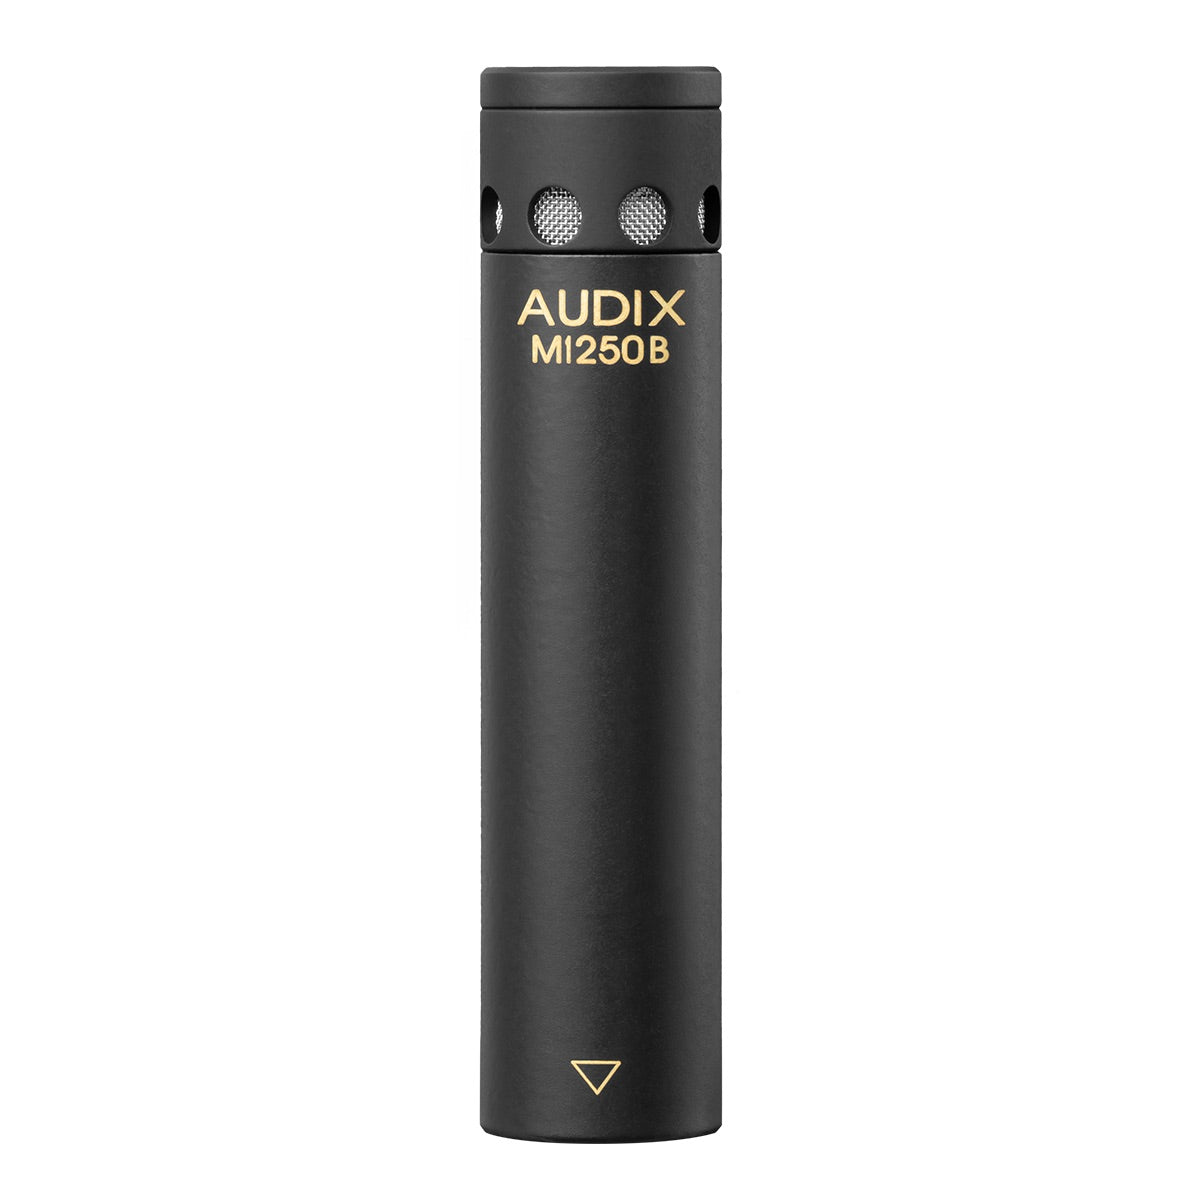 Audix M1250B Miniaturized Condenser Microphone, black